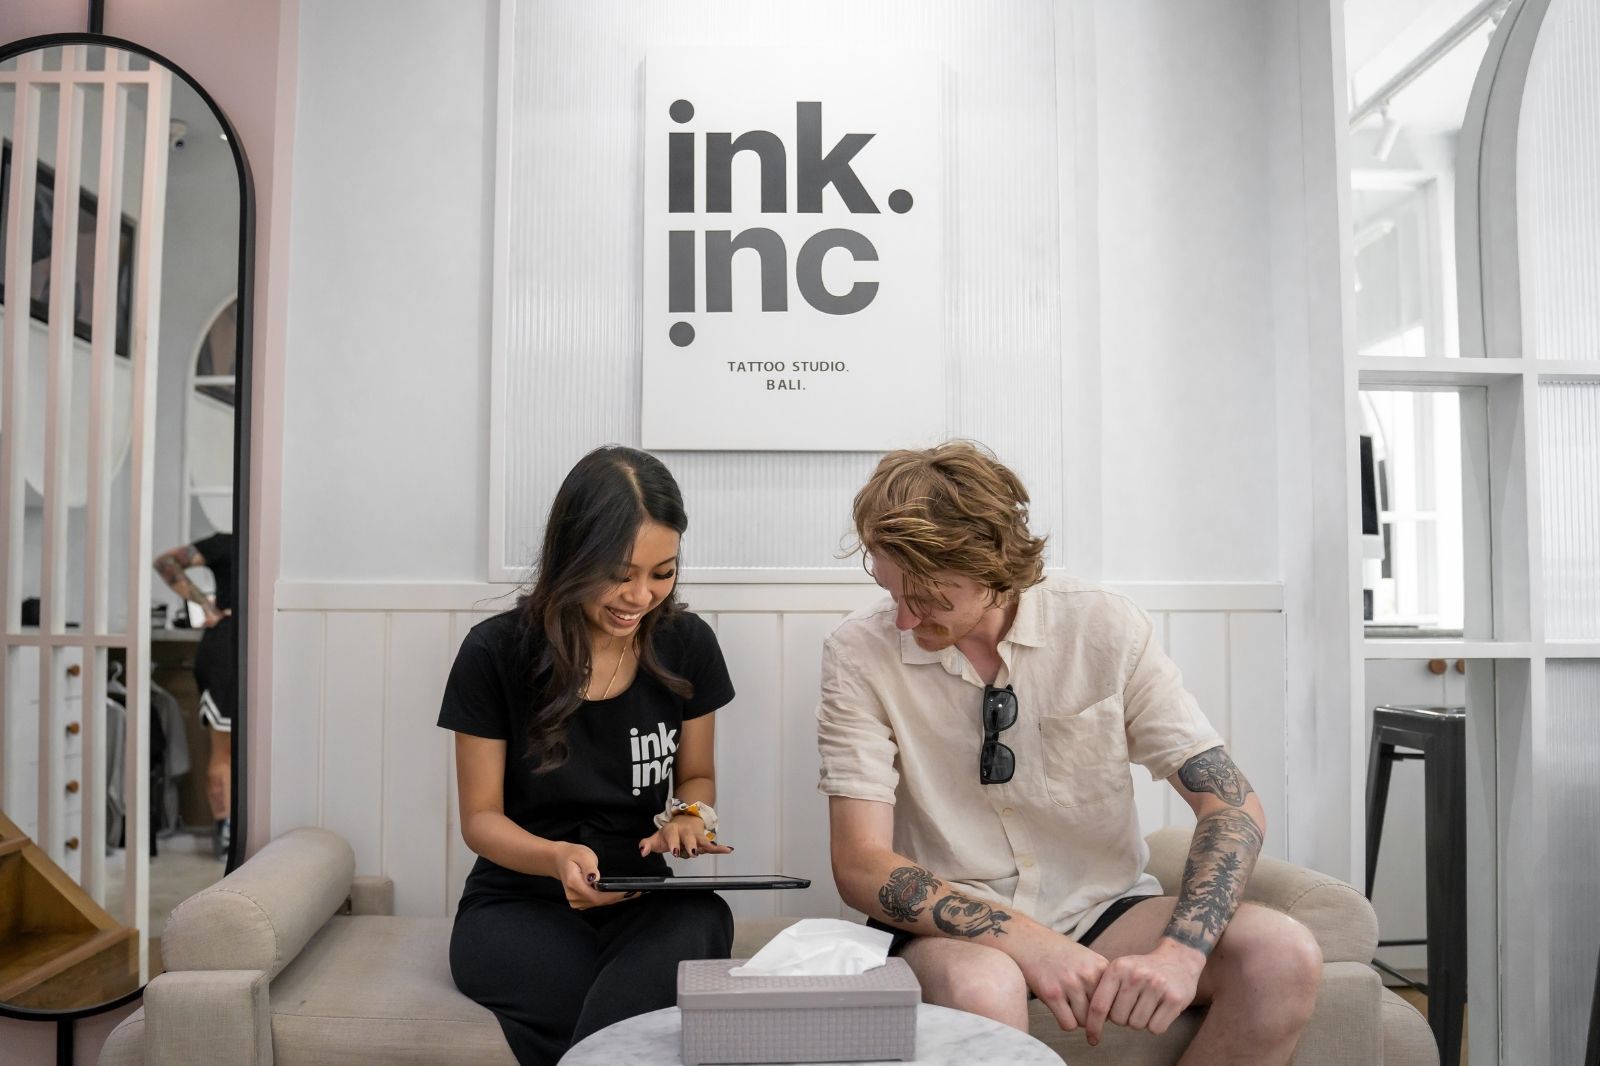 ink.inc Bali: A Top-Tier Tattoo Studio Experience in Seminyak